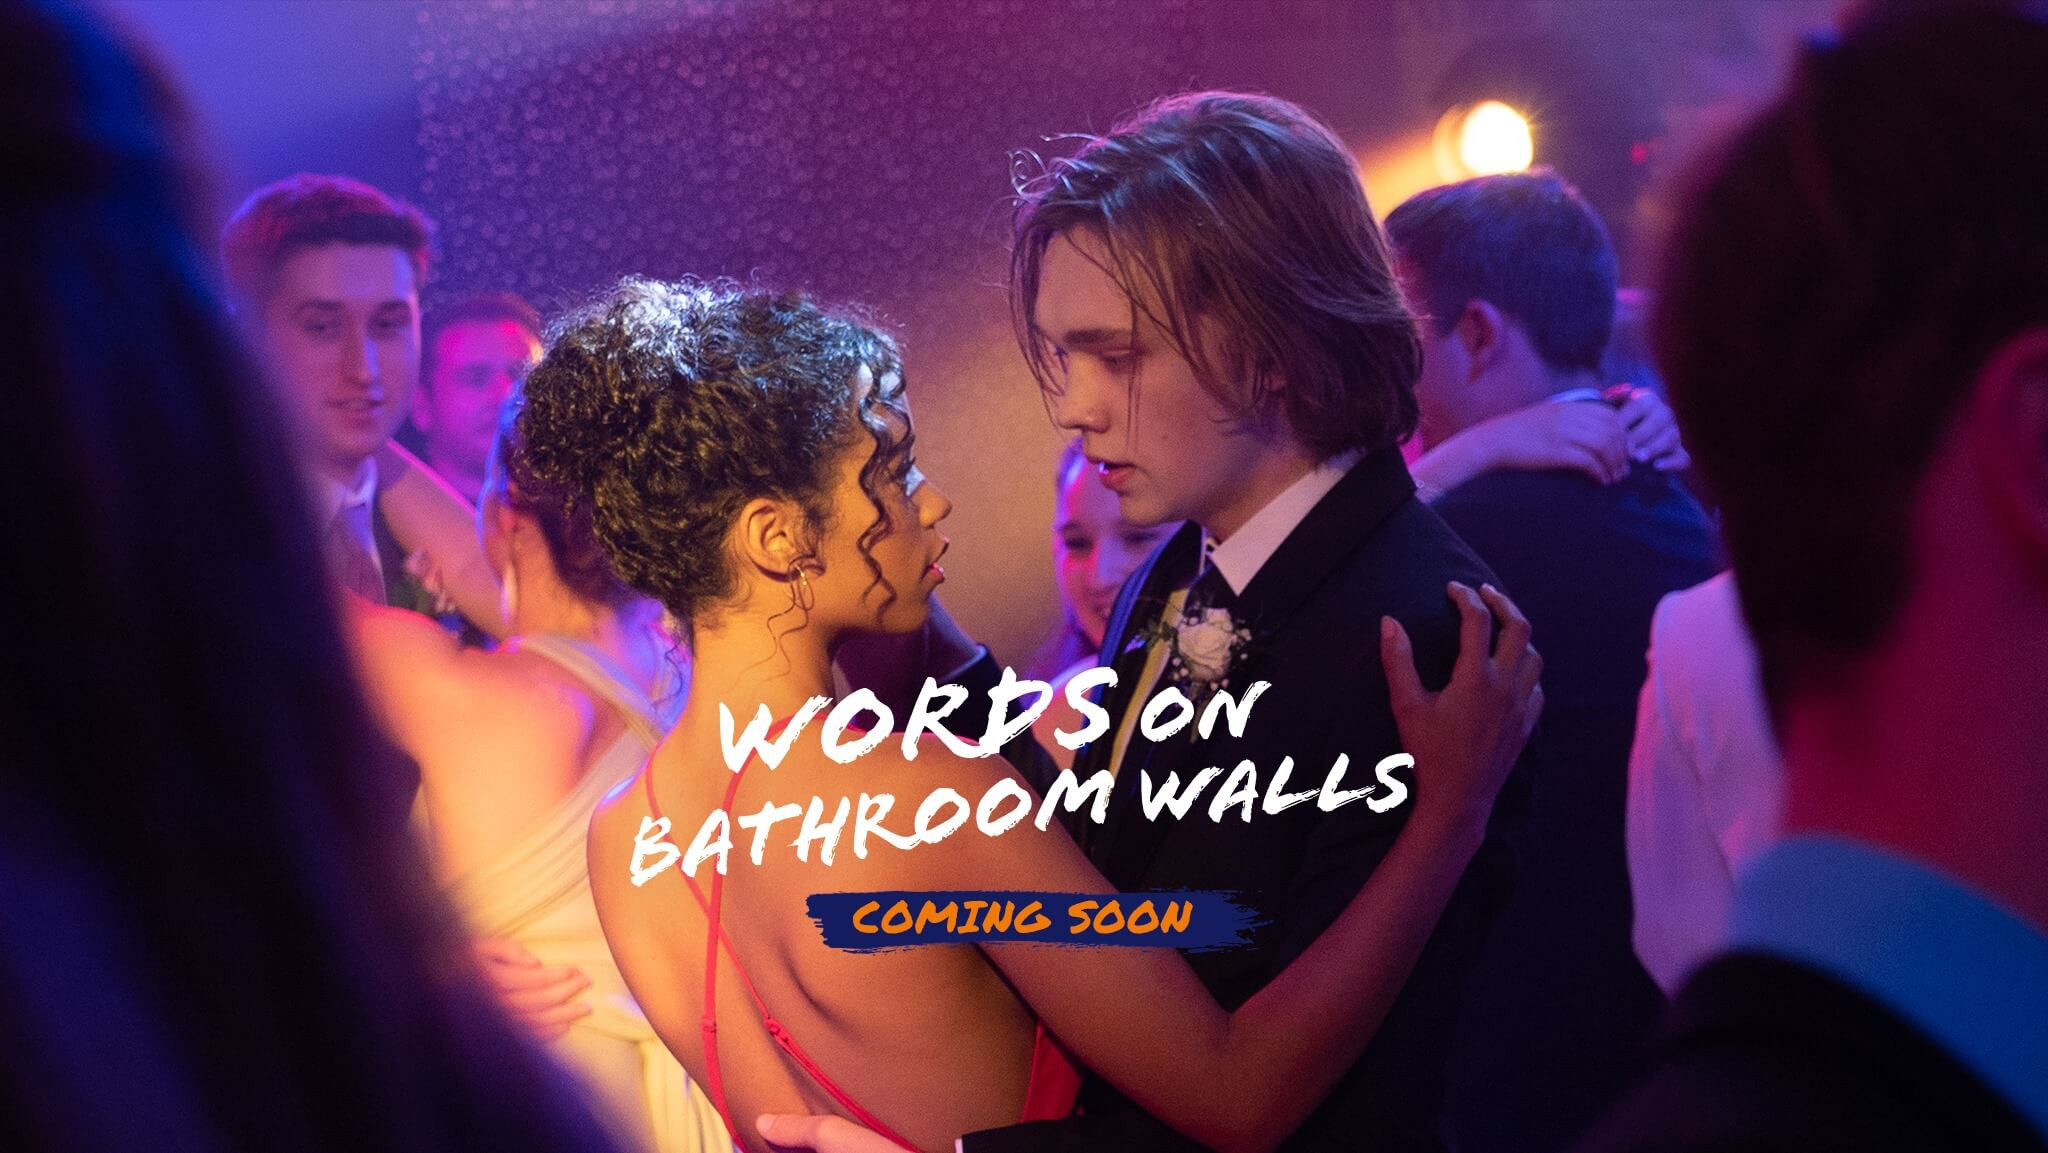 Words On Bathroom Walls Movie
 WATCH The Trailer to the Words on Bathroom Walls